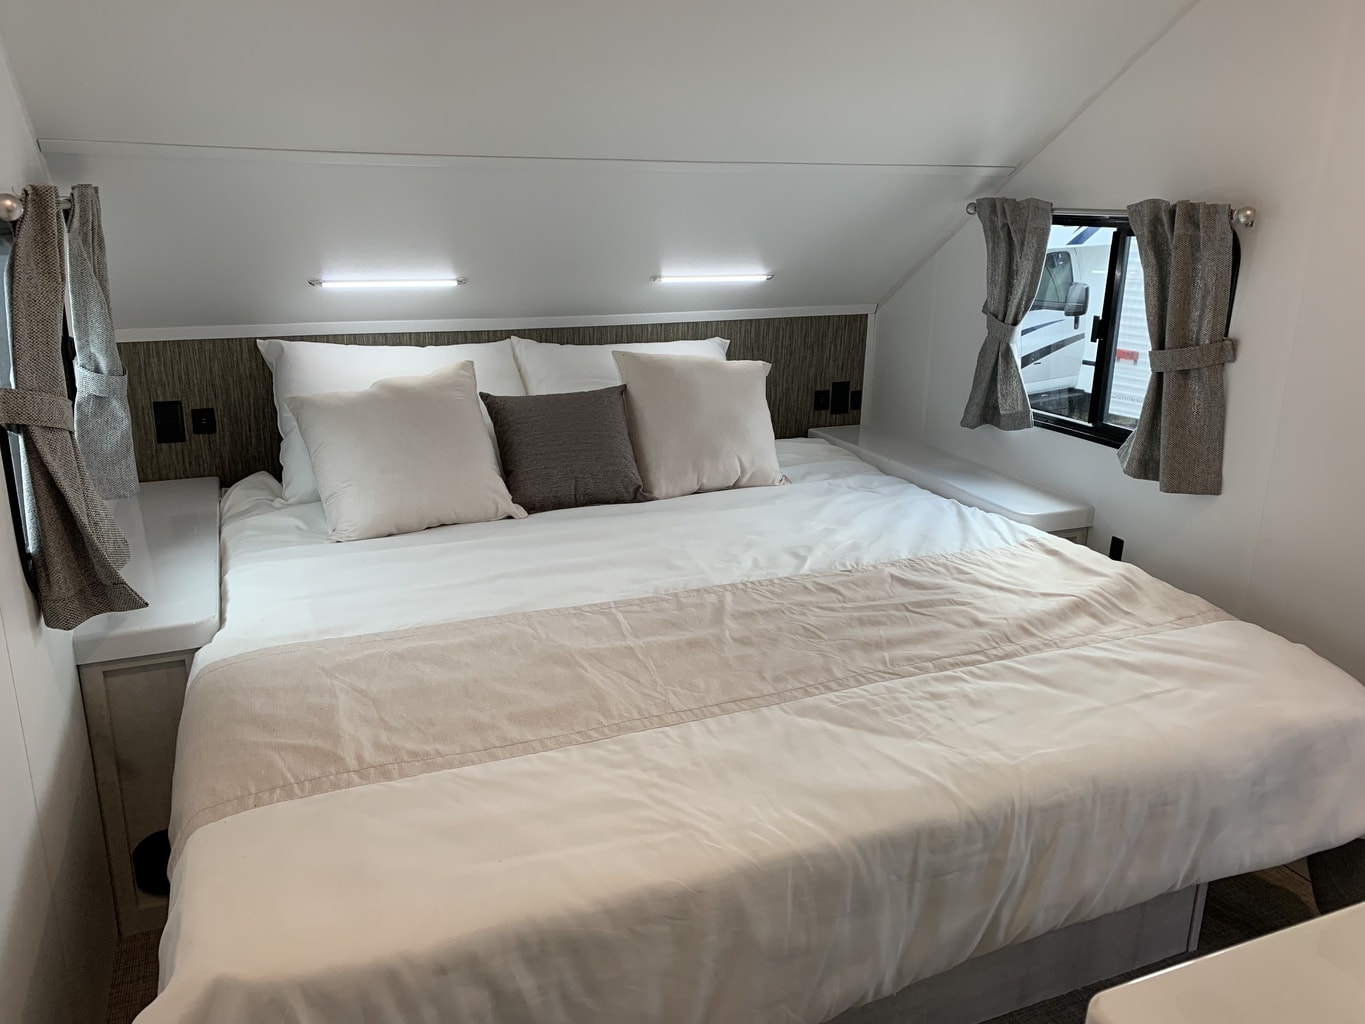 Best Rv Sheets Sets 2021 Short Queen, Camper Bunk Bedding